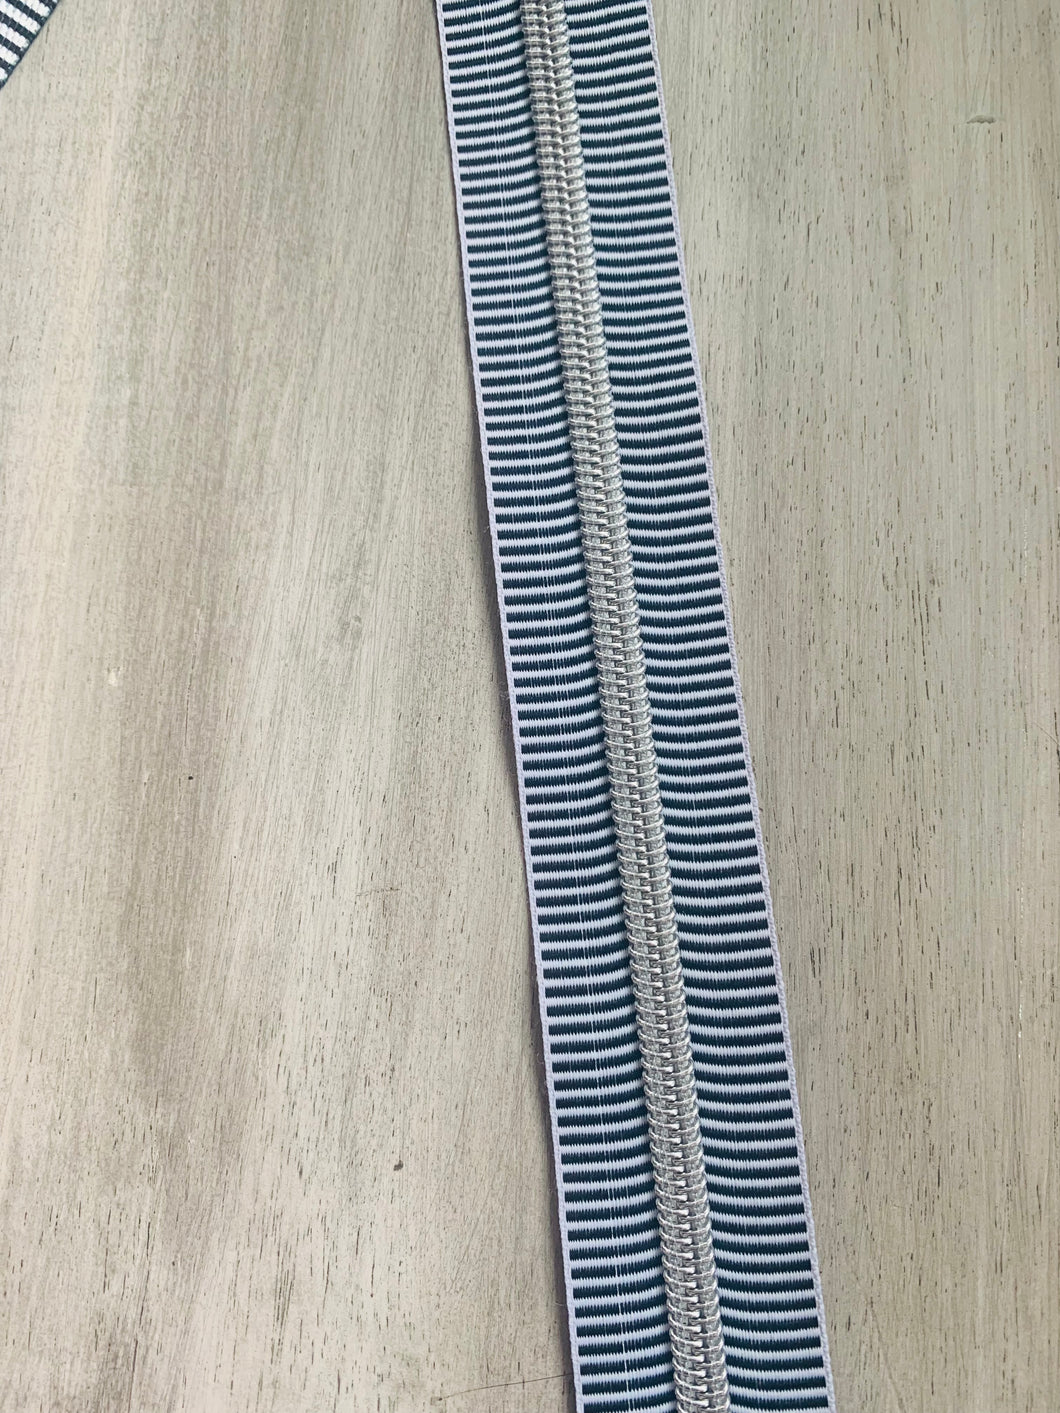 Black Nylon Coil Zipper (#5 Size) with White Tape & Black Metal Pulls -  Zipper by the Yard - Nylon Coil Zipper - Metallic Zipper